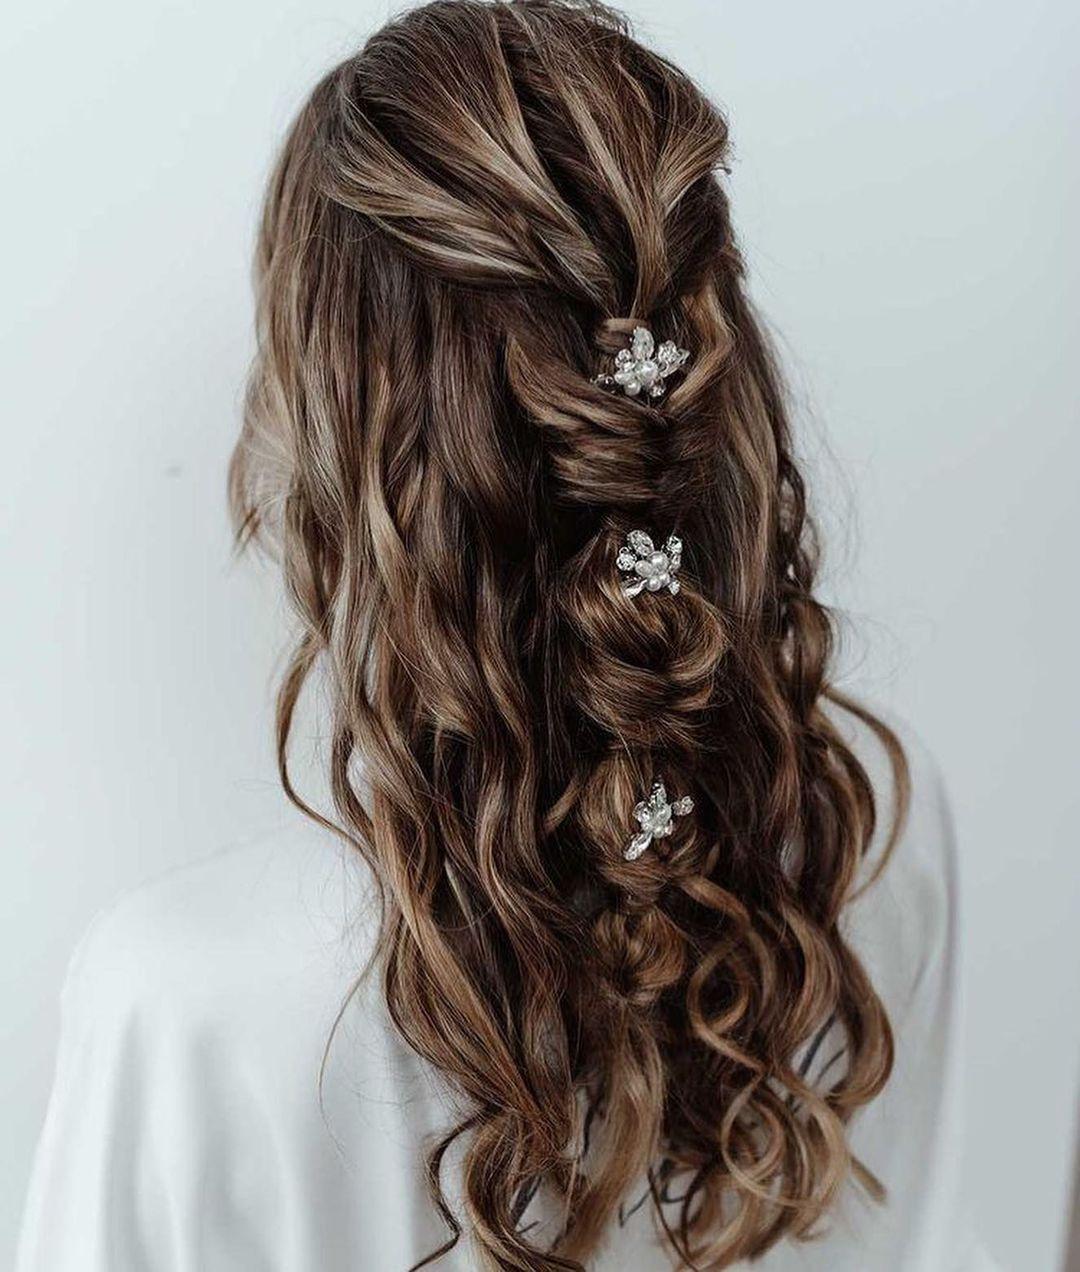 Half Up Half Down Wedding Hairstyles: 23 Inspirational Ideas & Tips -  